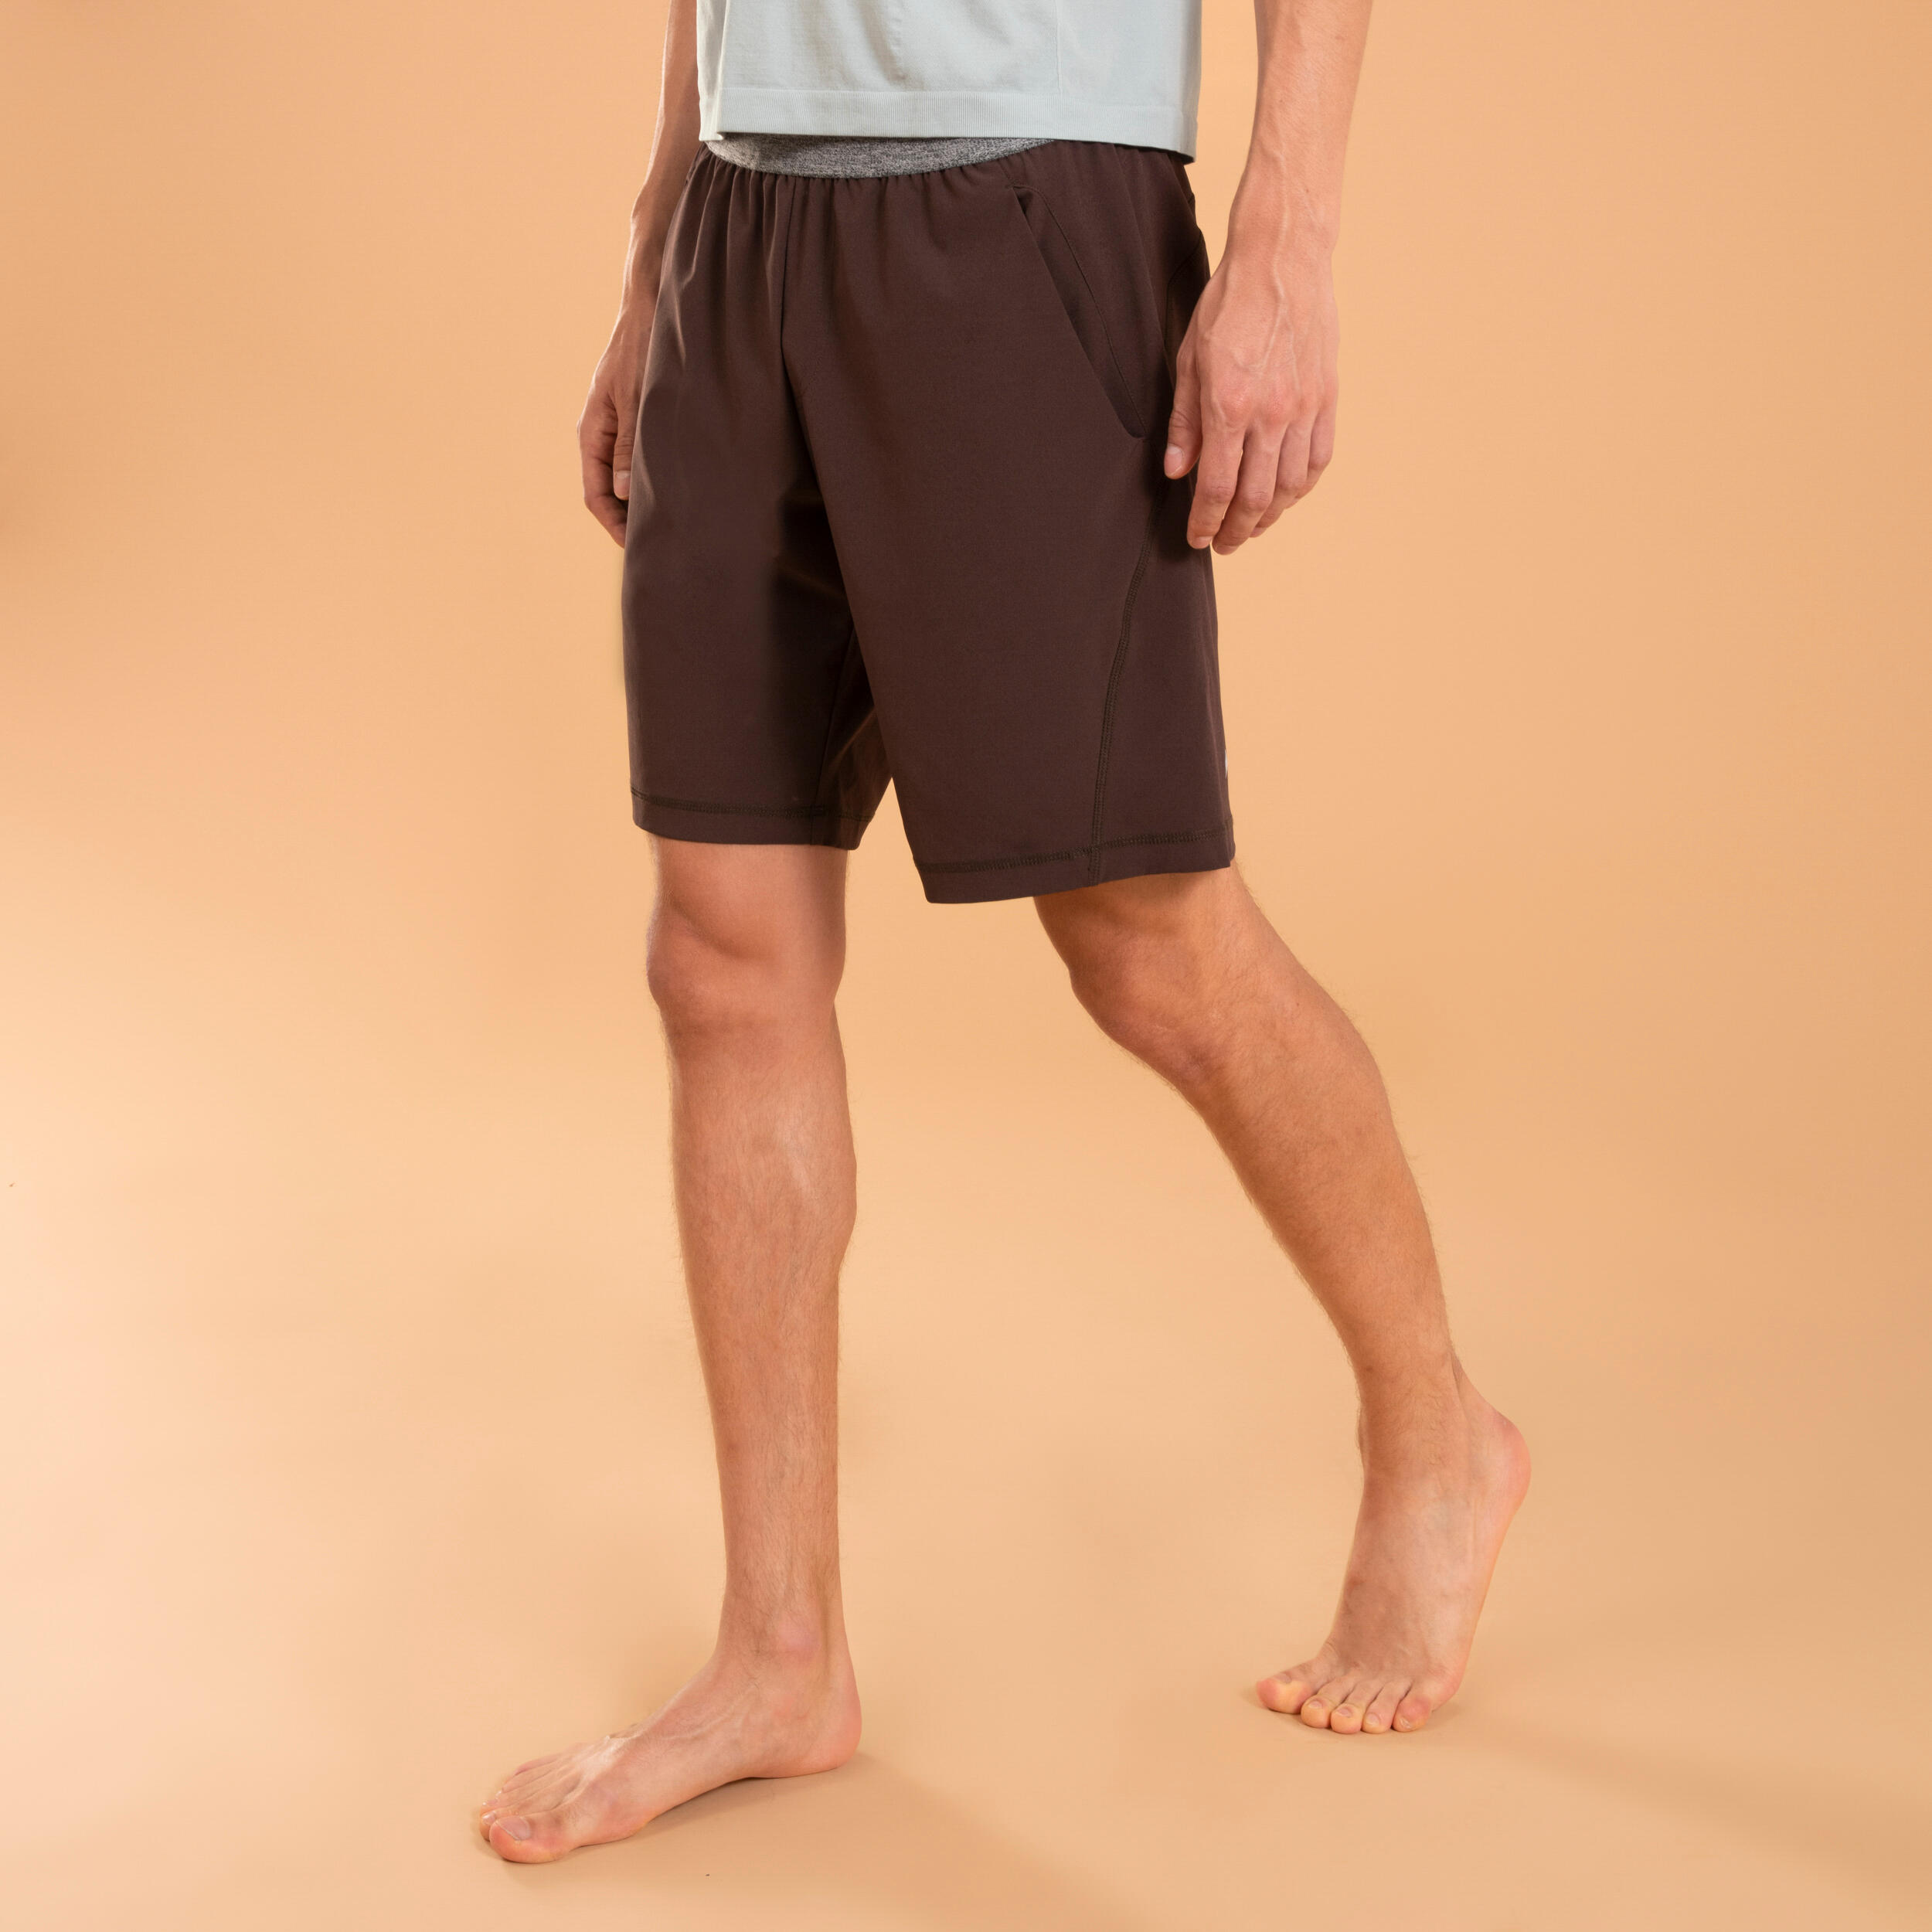 KIMJALY Men's Lightweight Dynamic Yoga Shorts - Brown